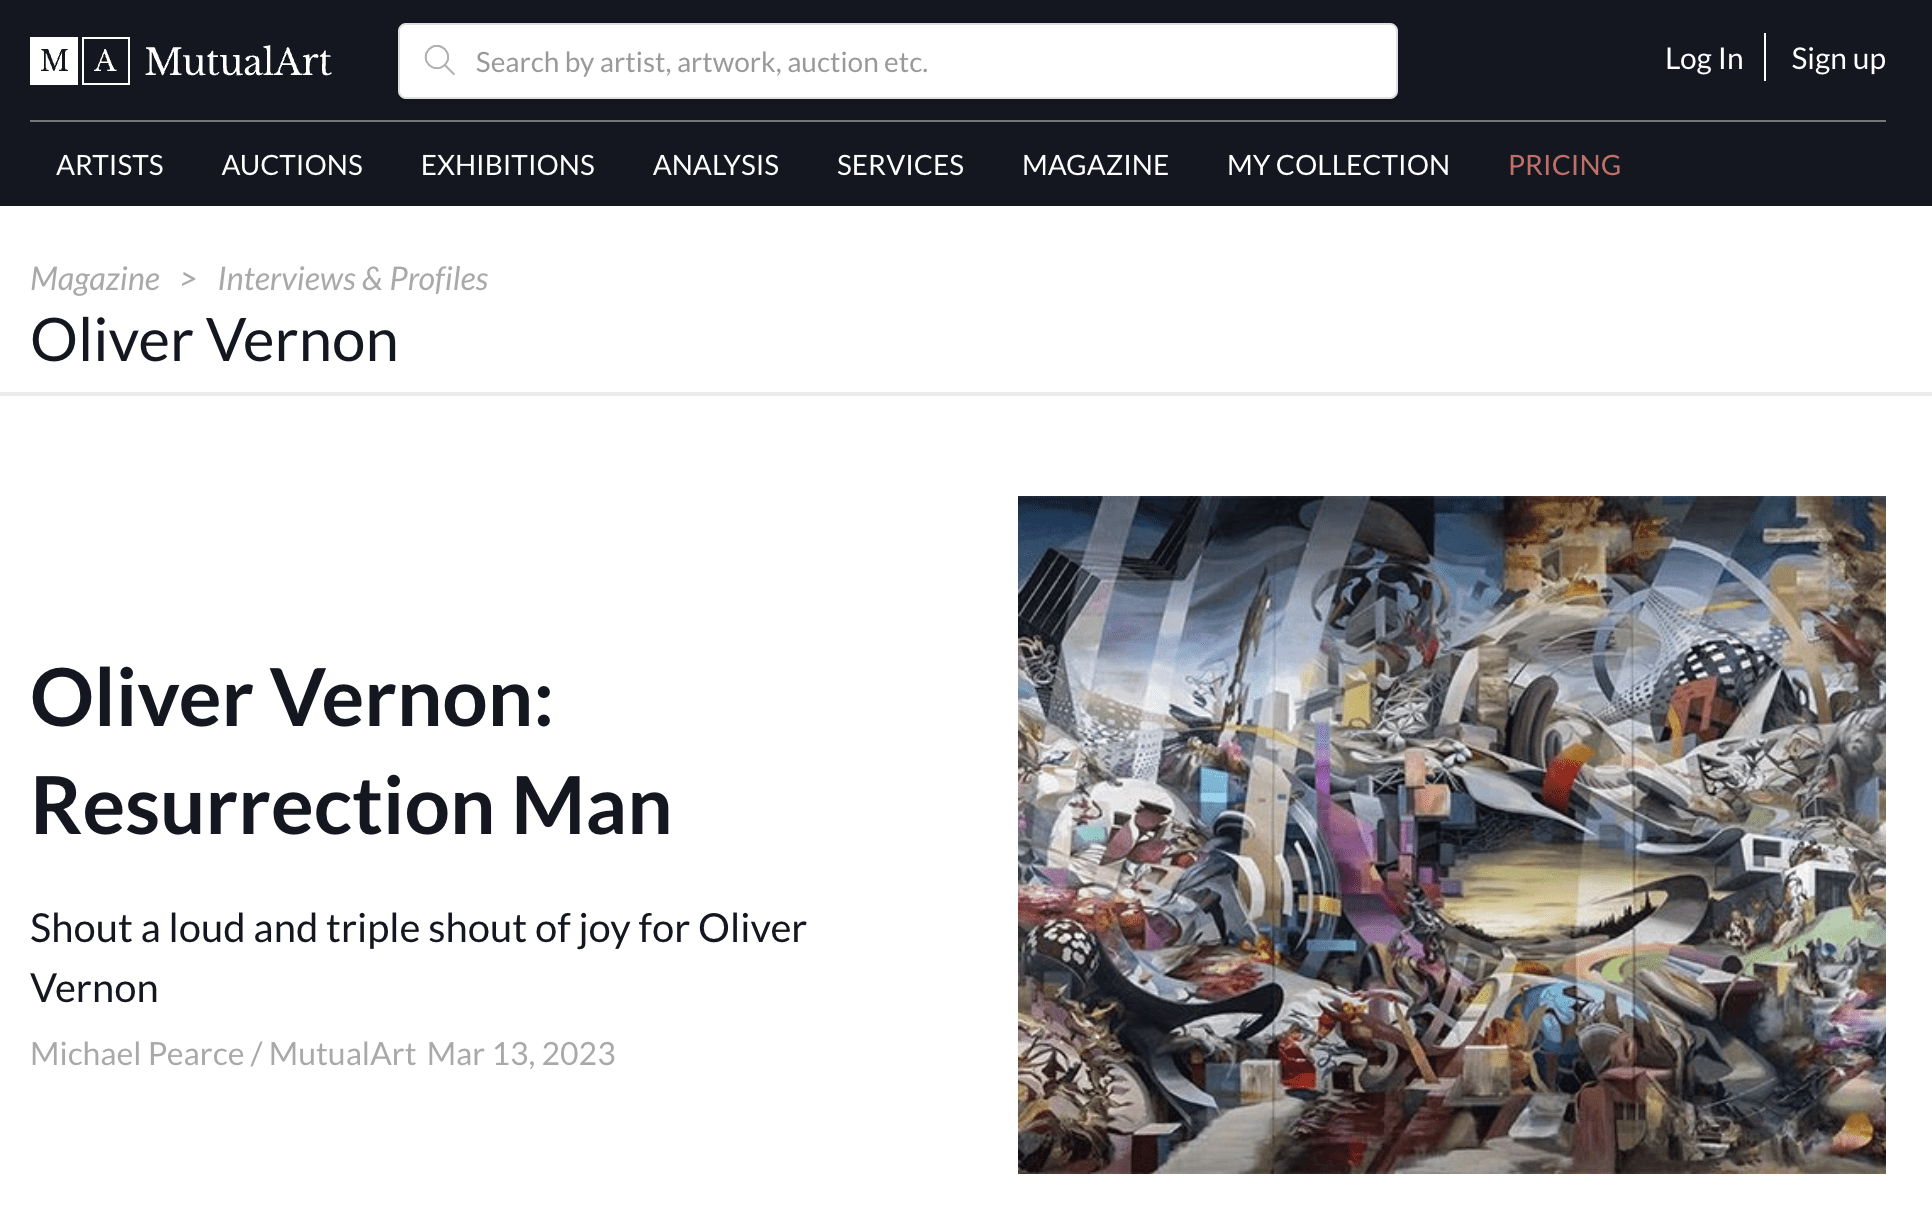 Oliver Vernon: Resurrection Man